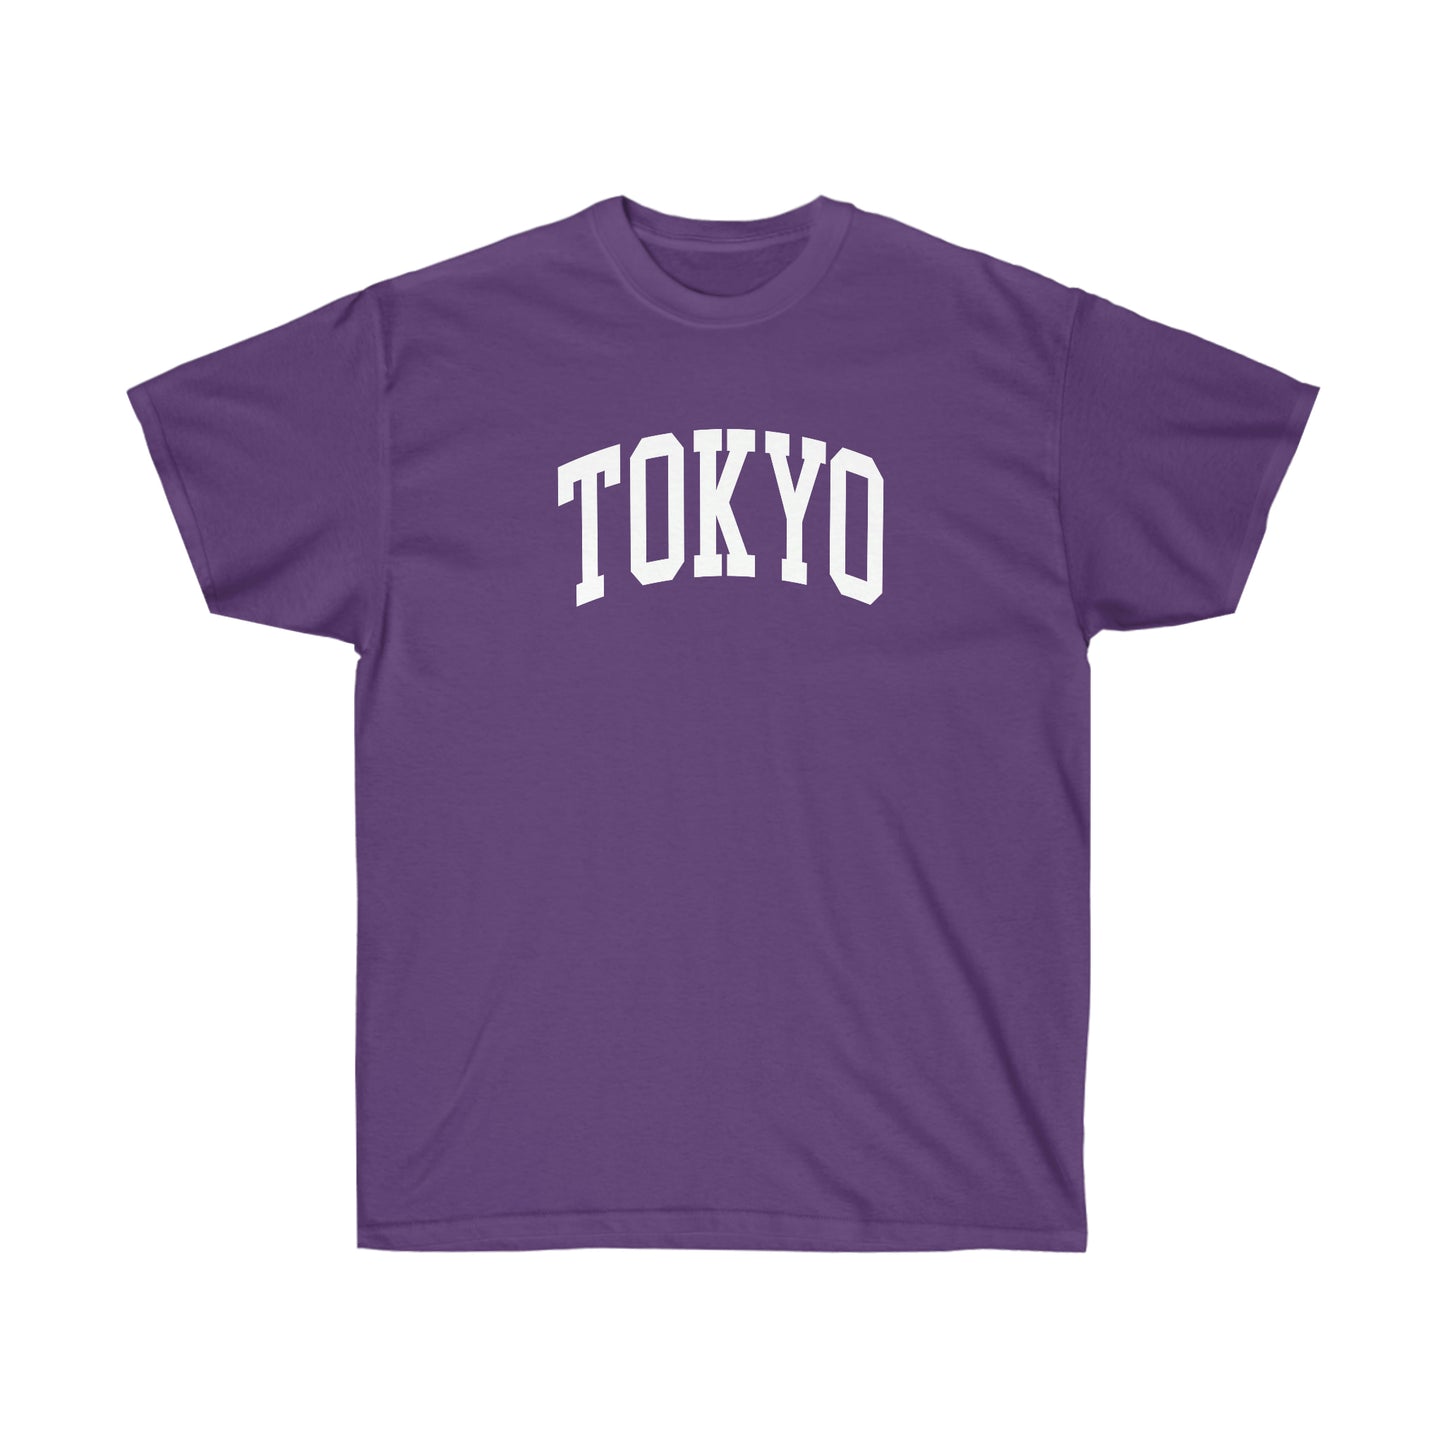 Tokyo dhirt Tokyo Japan T-Shirt College Style T Shirt Vintage Inspired Short Sleeve Tee